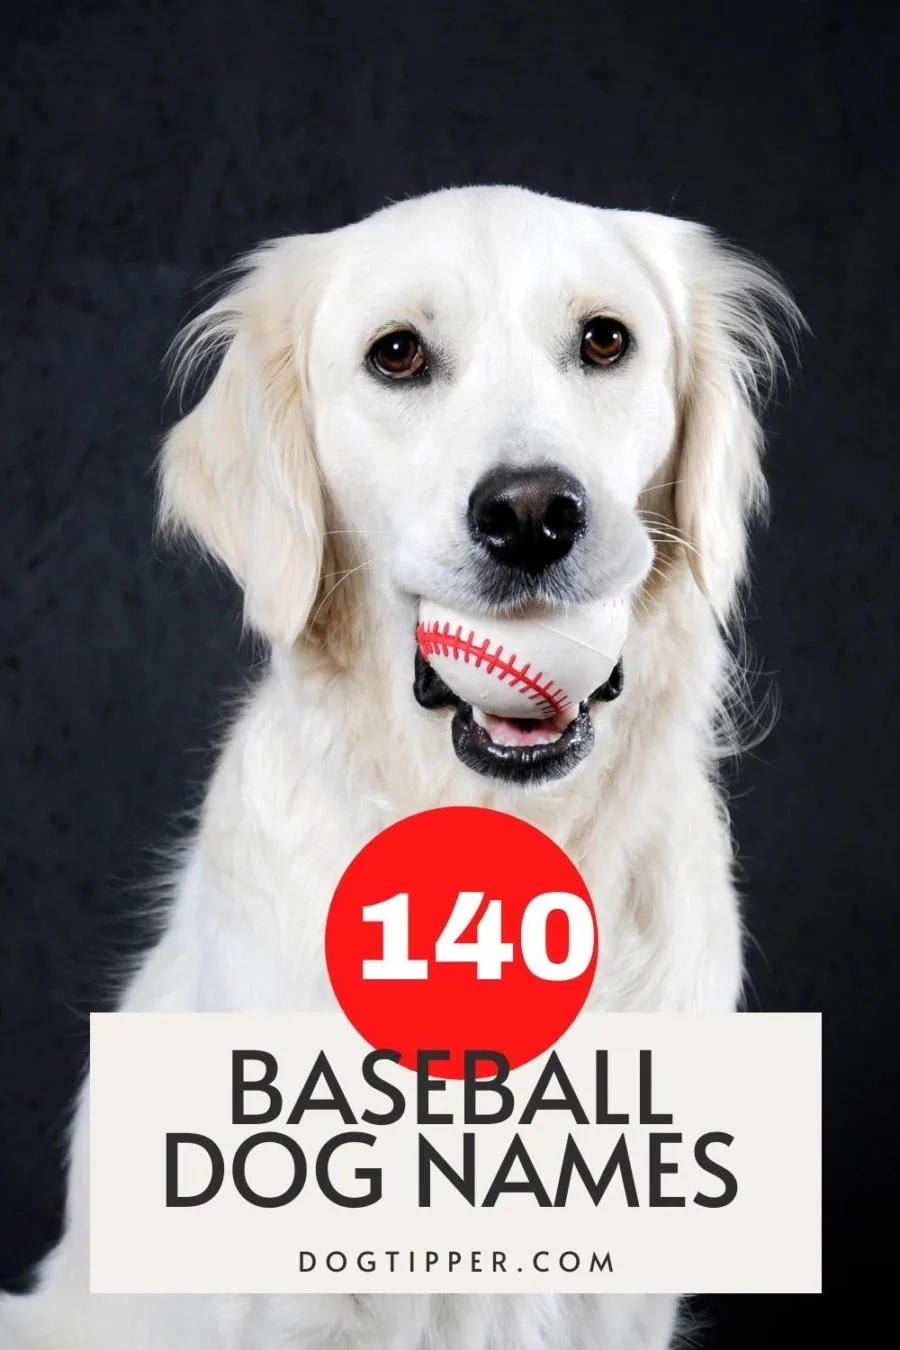 Pets First Philadelphia Phillies MLB Dog Collar, Small